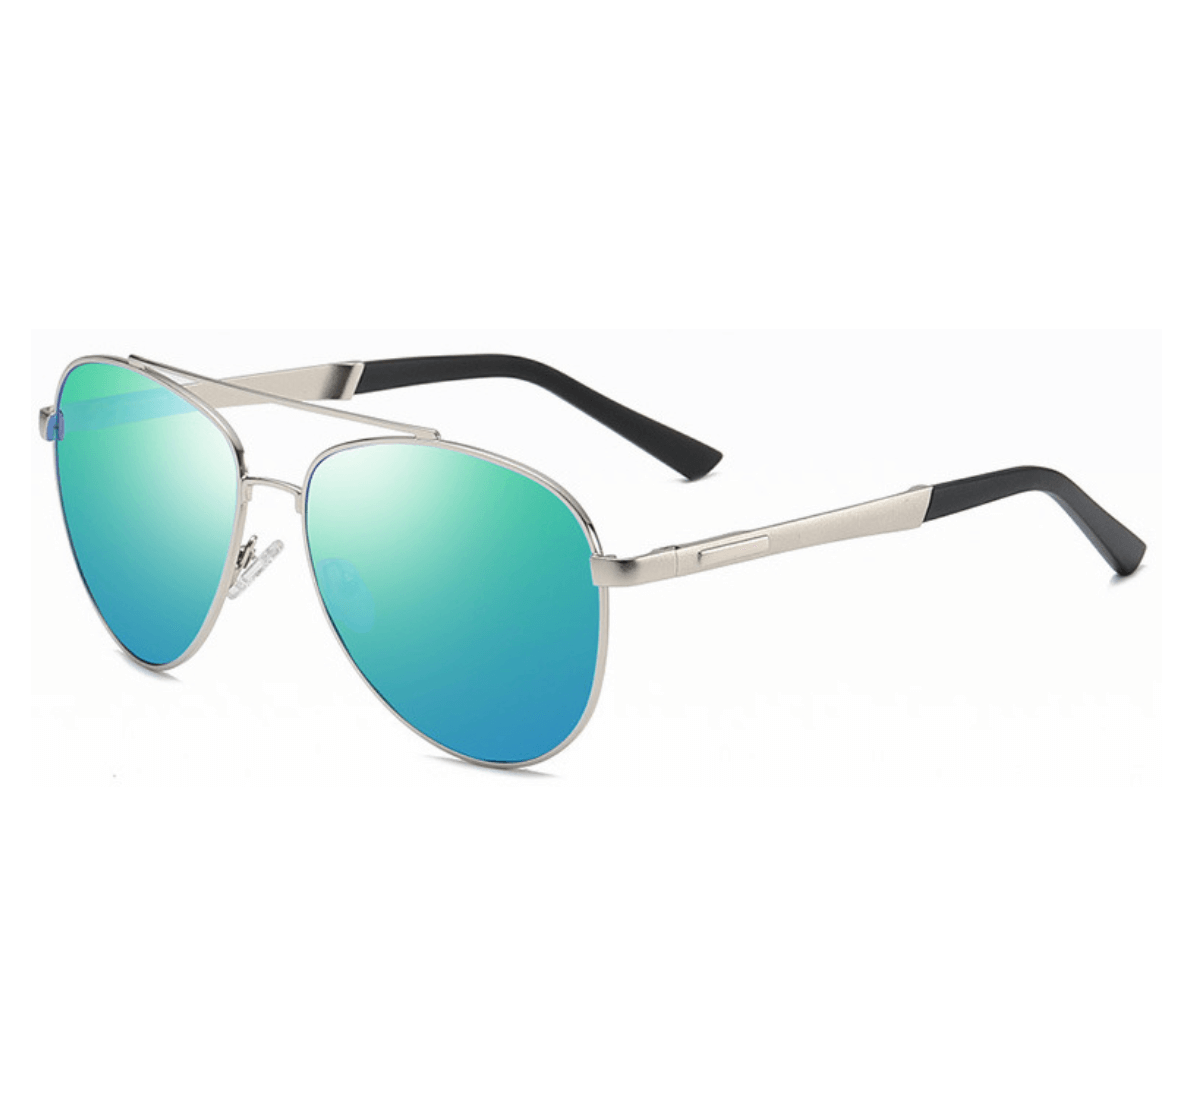 Wholesale silver frame aviator sunglasses, aviator sunglasses manufacturer, sunglasses wholesale vendors, sunglasses supplier